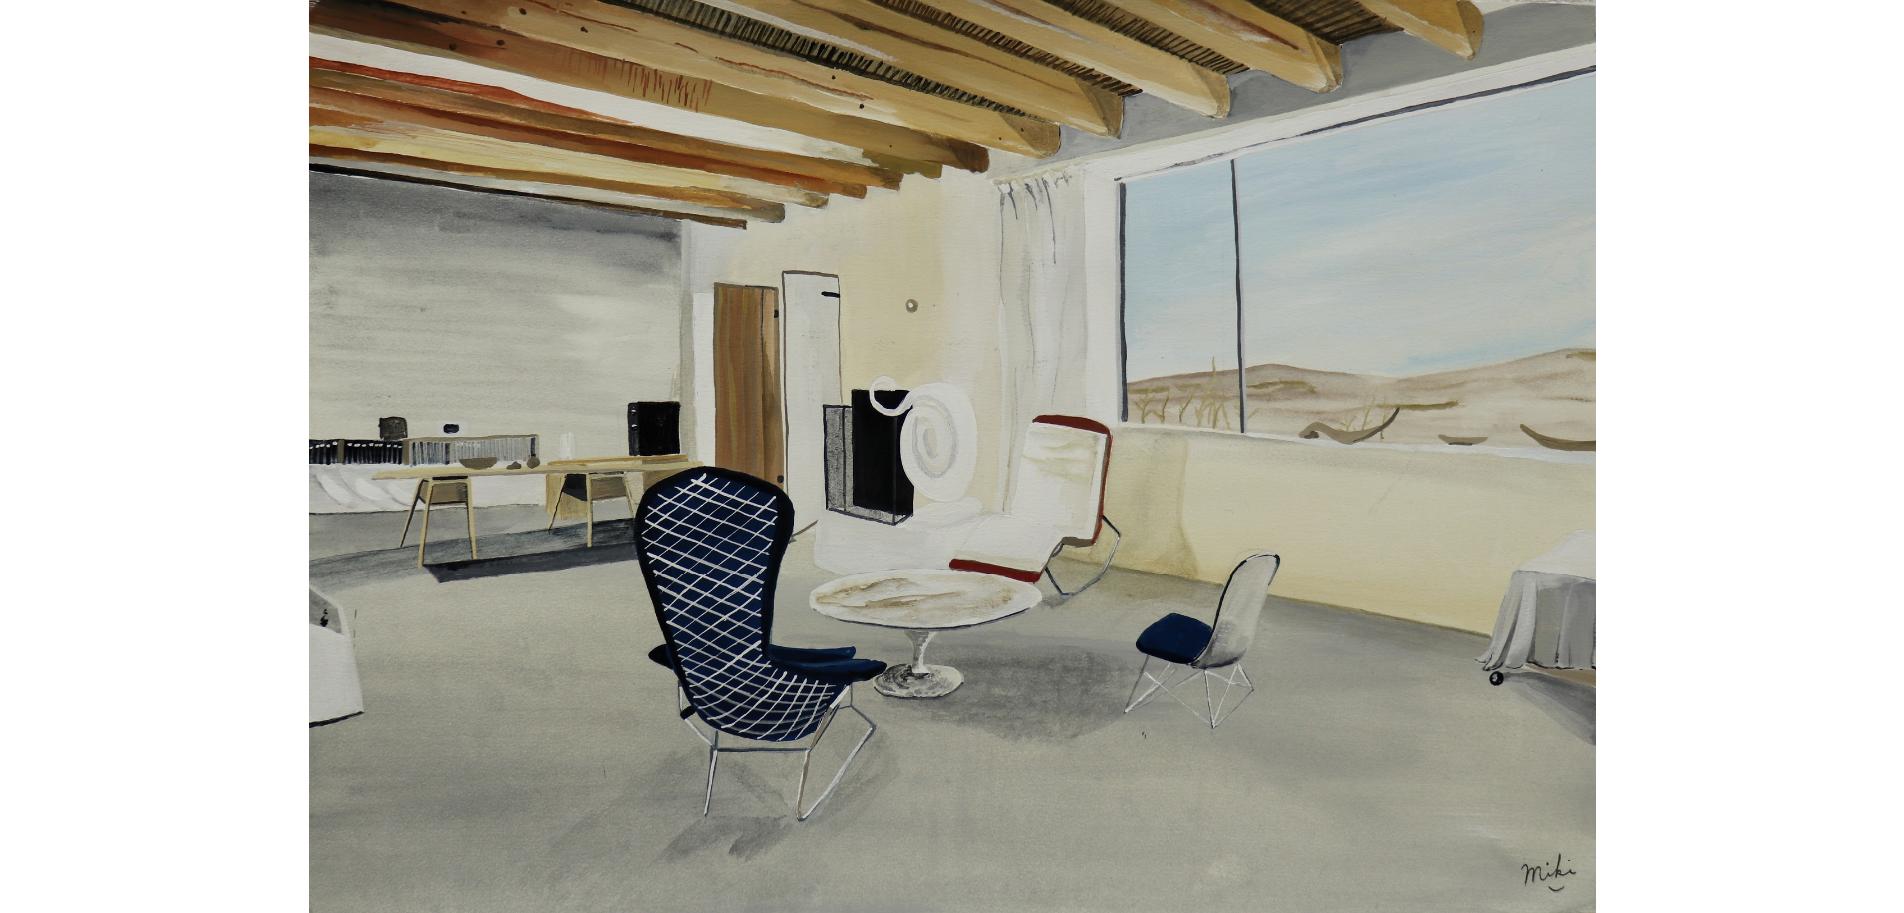 Georgia O'Keeffe's Studio & Fireplace, interiors, desert landscape, earth tones - Painting by Miki Matsuyama